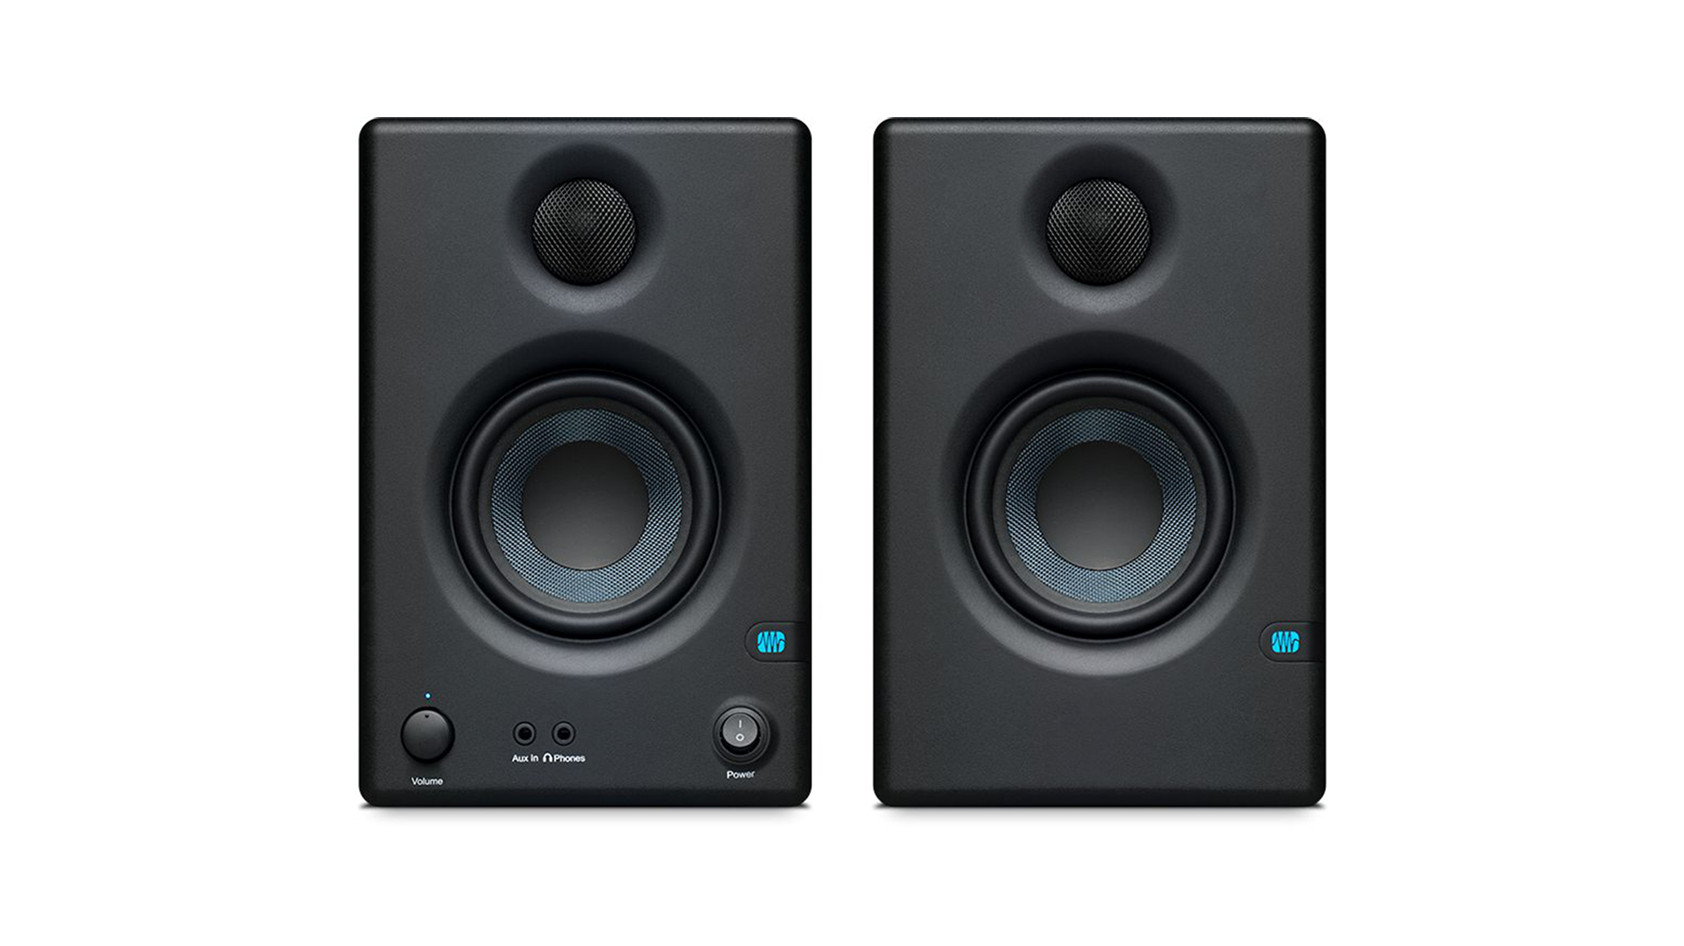 A product render of the PreSonus Eris 3.5 speakers.